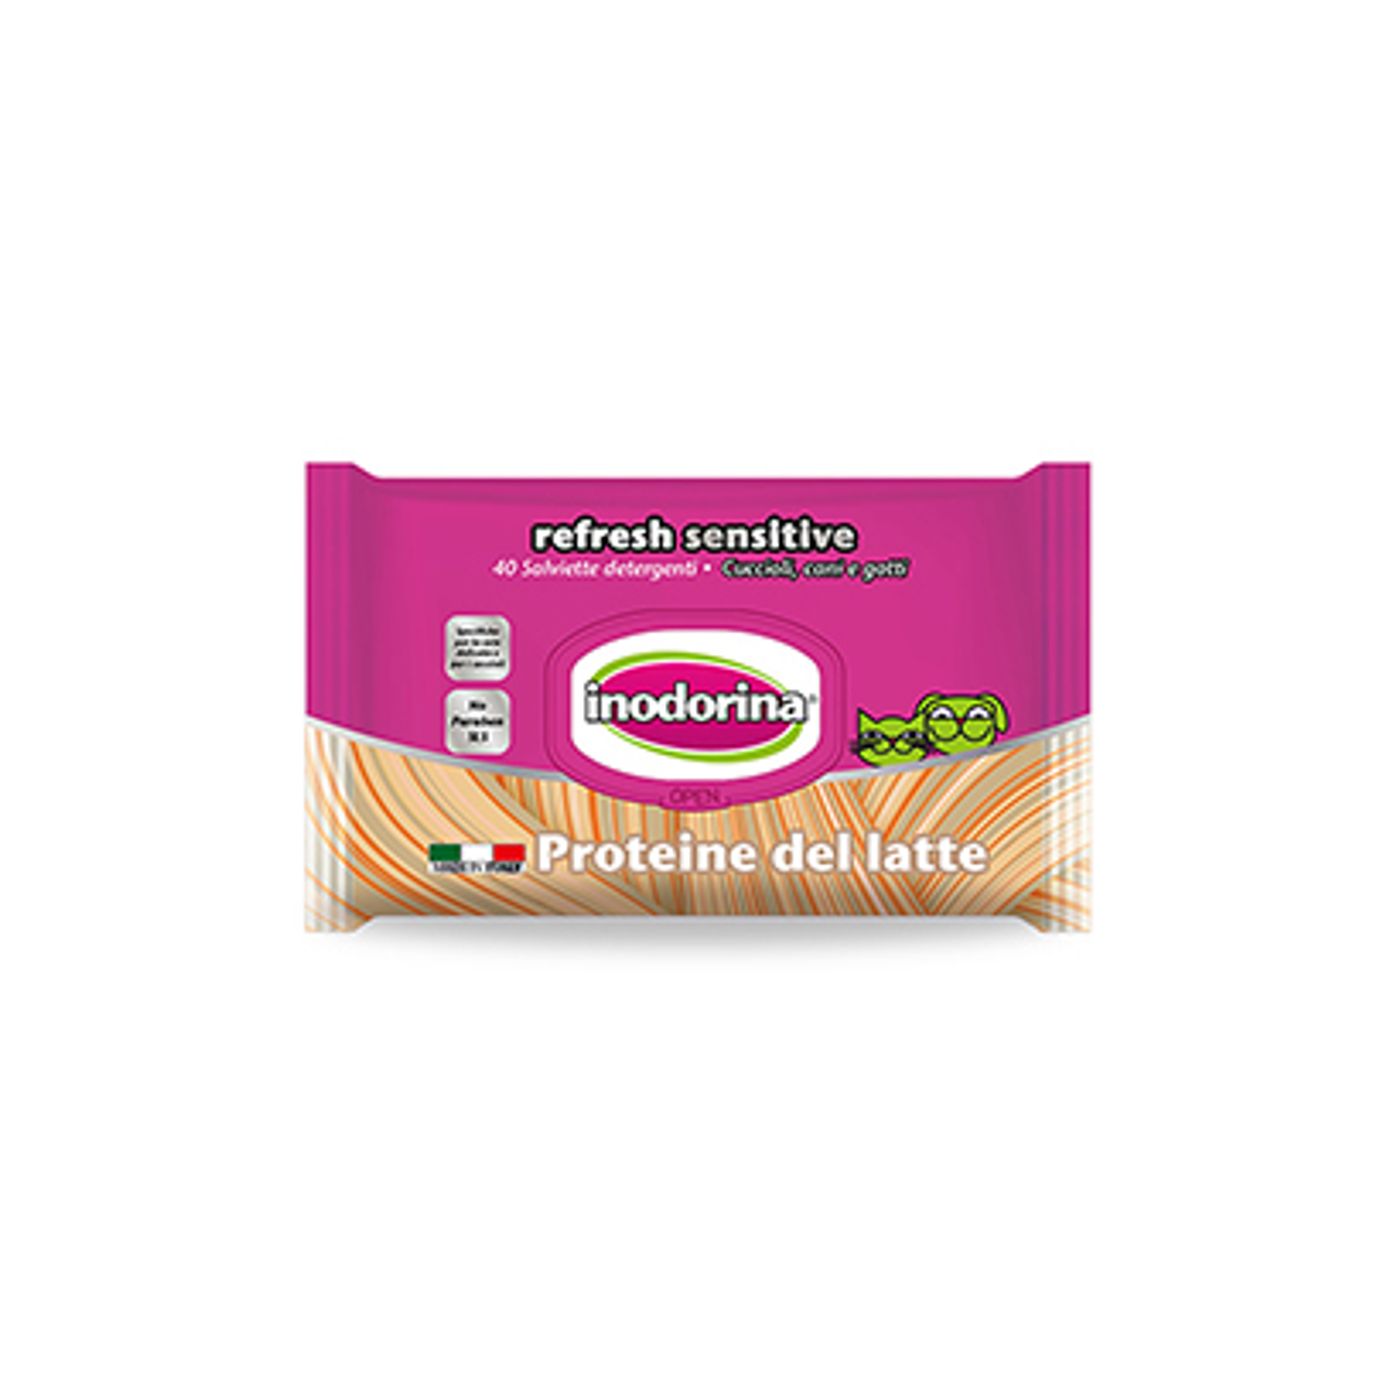 17325_inodorina_toalhetes_refresh_sensitive_proteine_latte